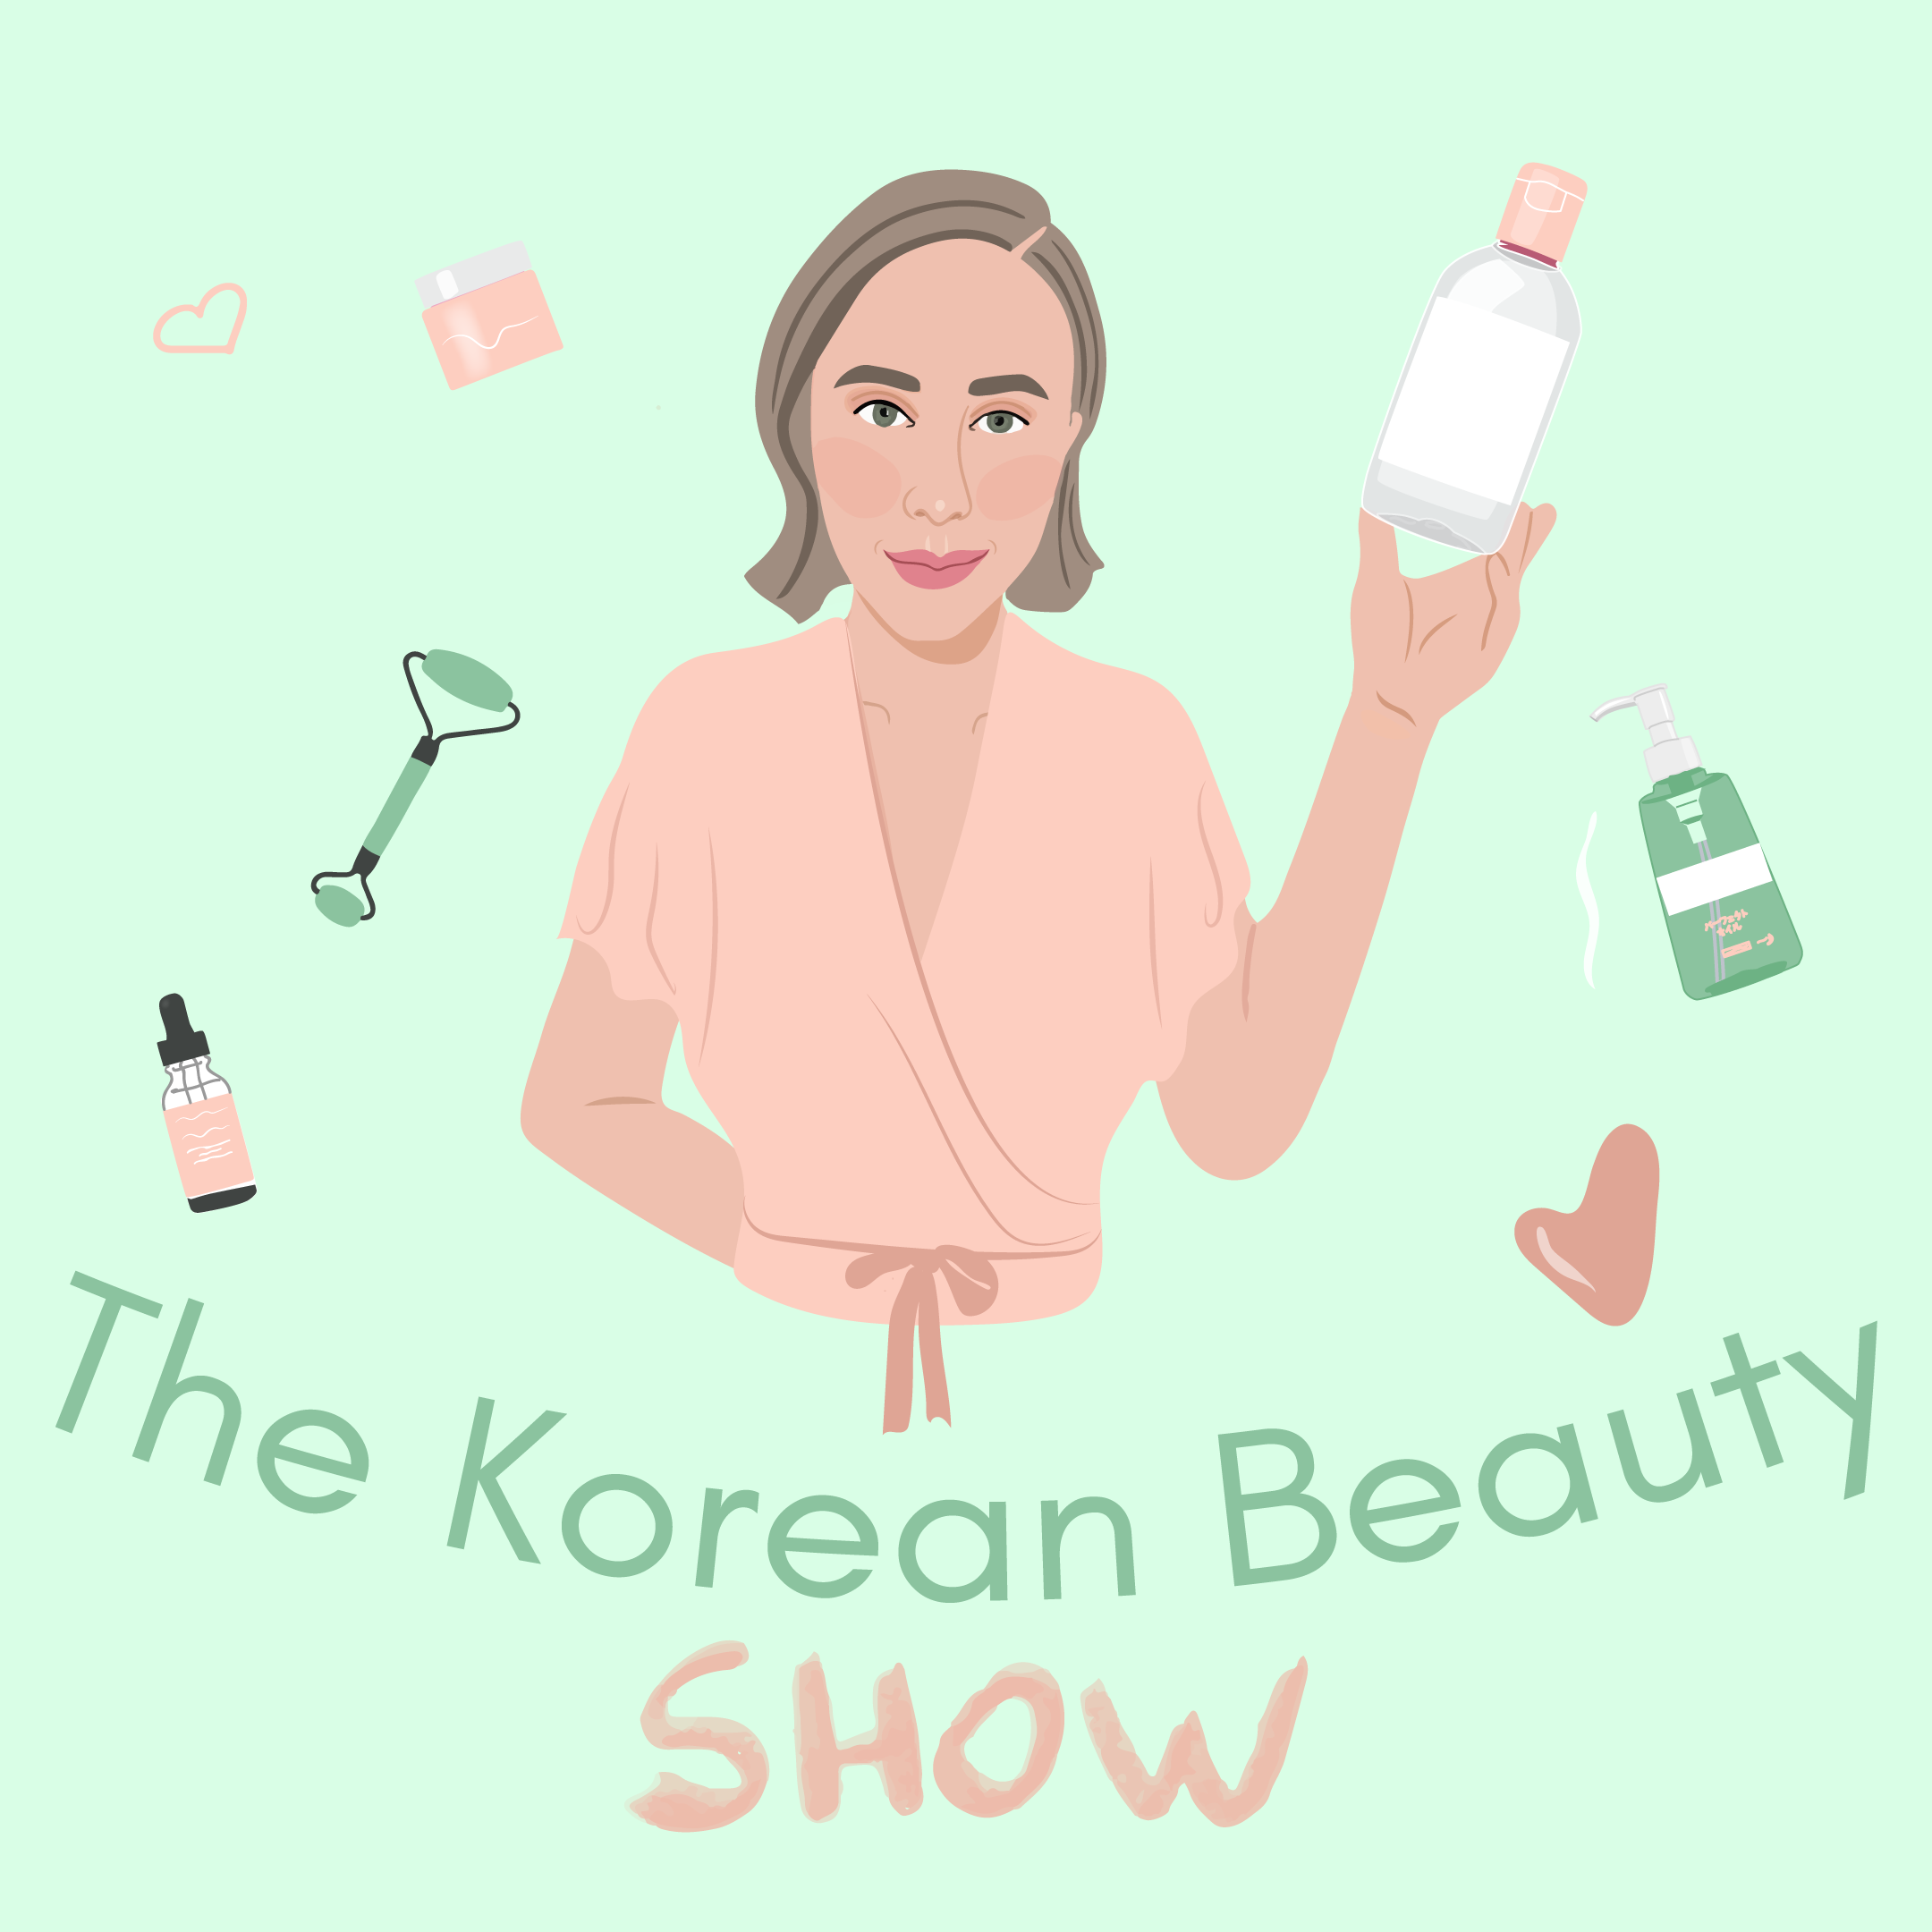 Hyaluronic Acid in Korean Skincare